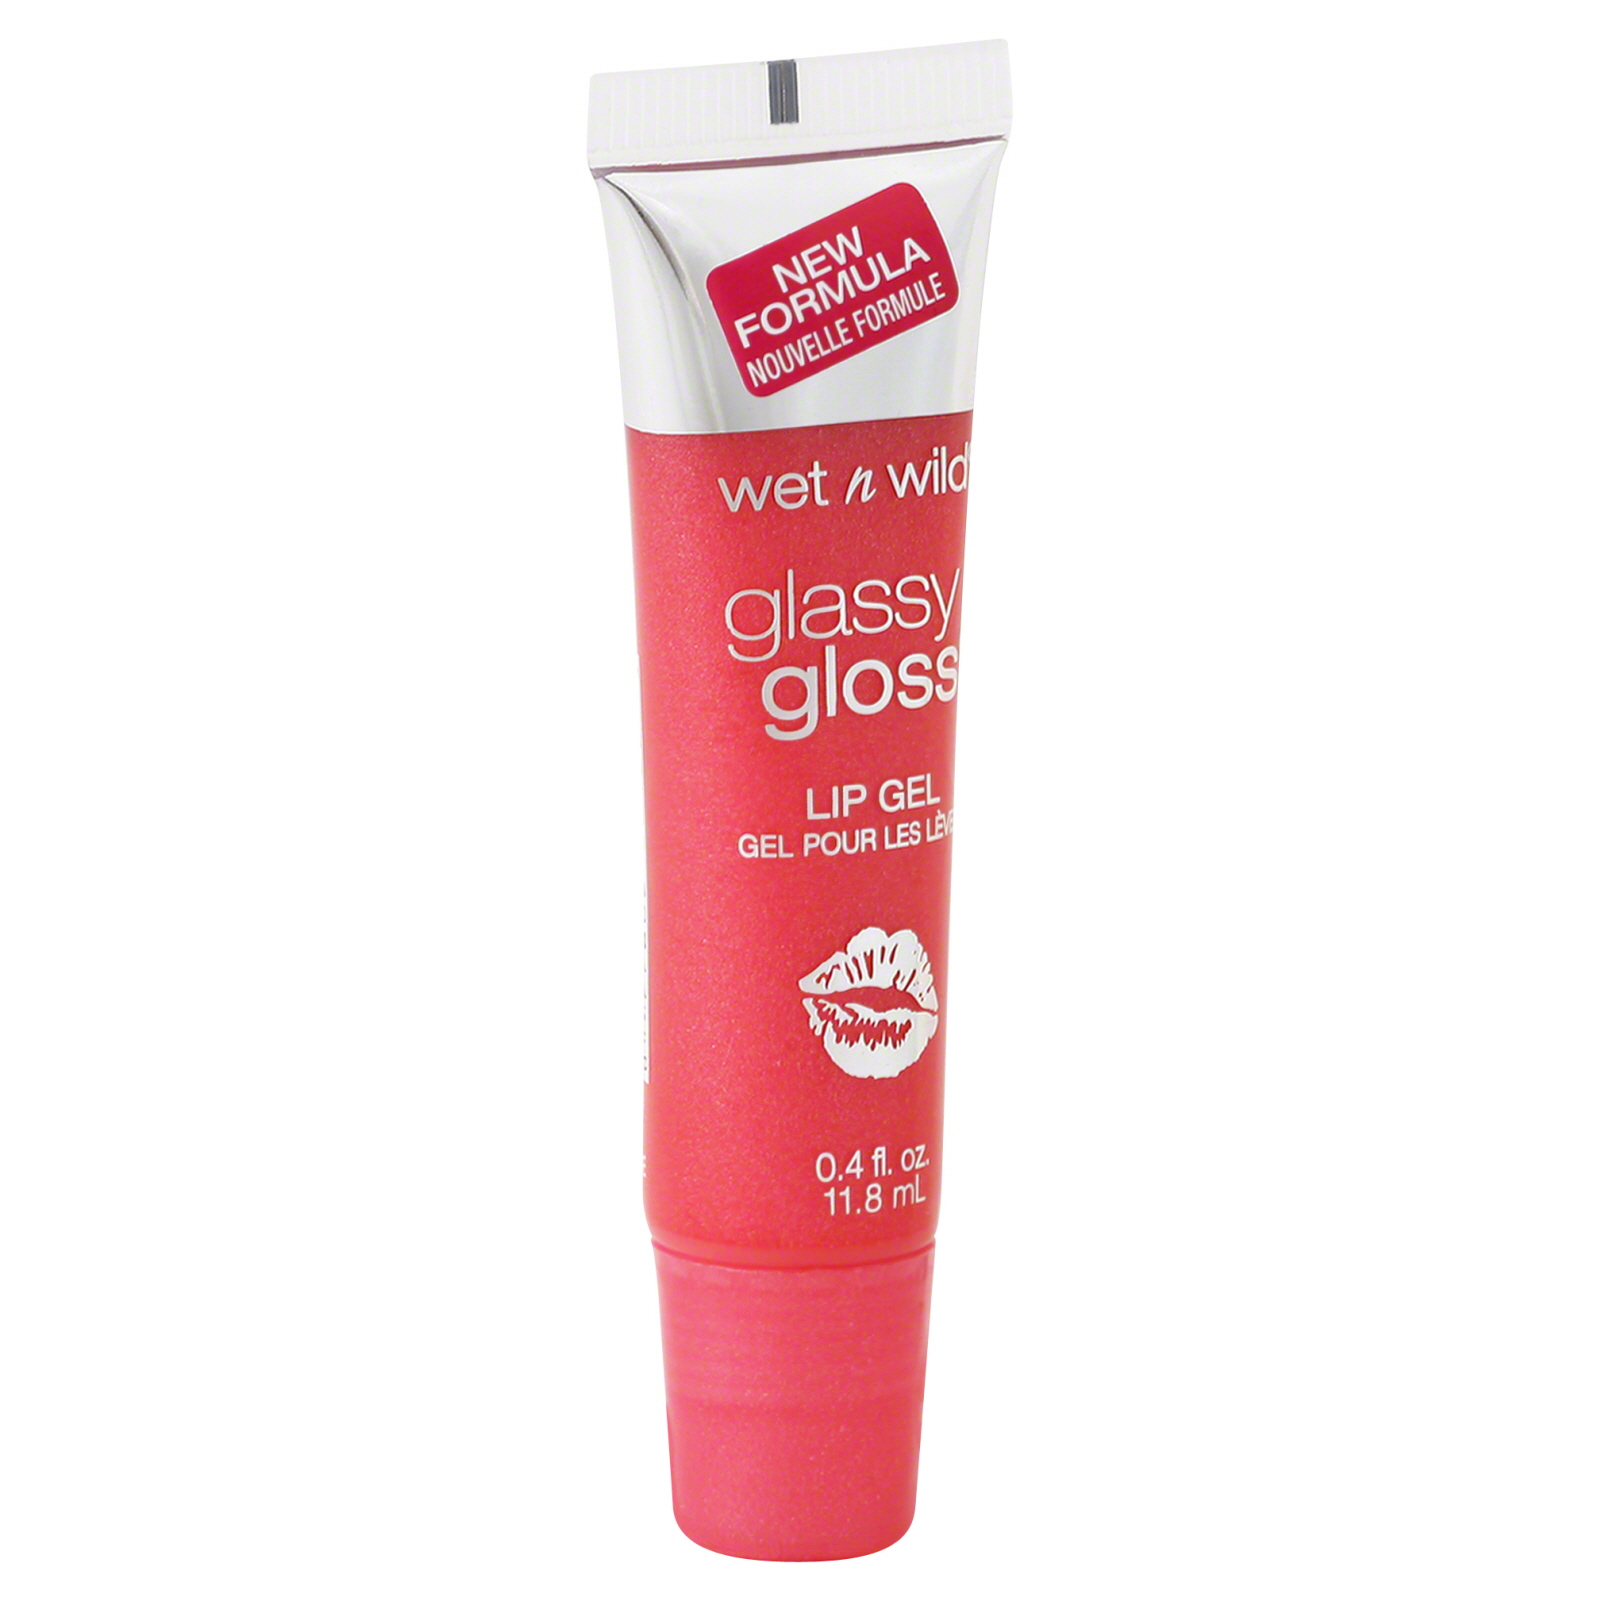 Glassy Gloss Lip Gel, Glass is in Session 312A, 0.4 fl oz (11.8 ml)